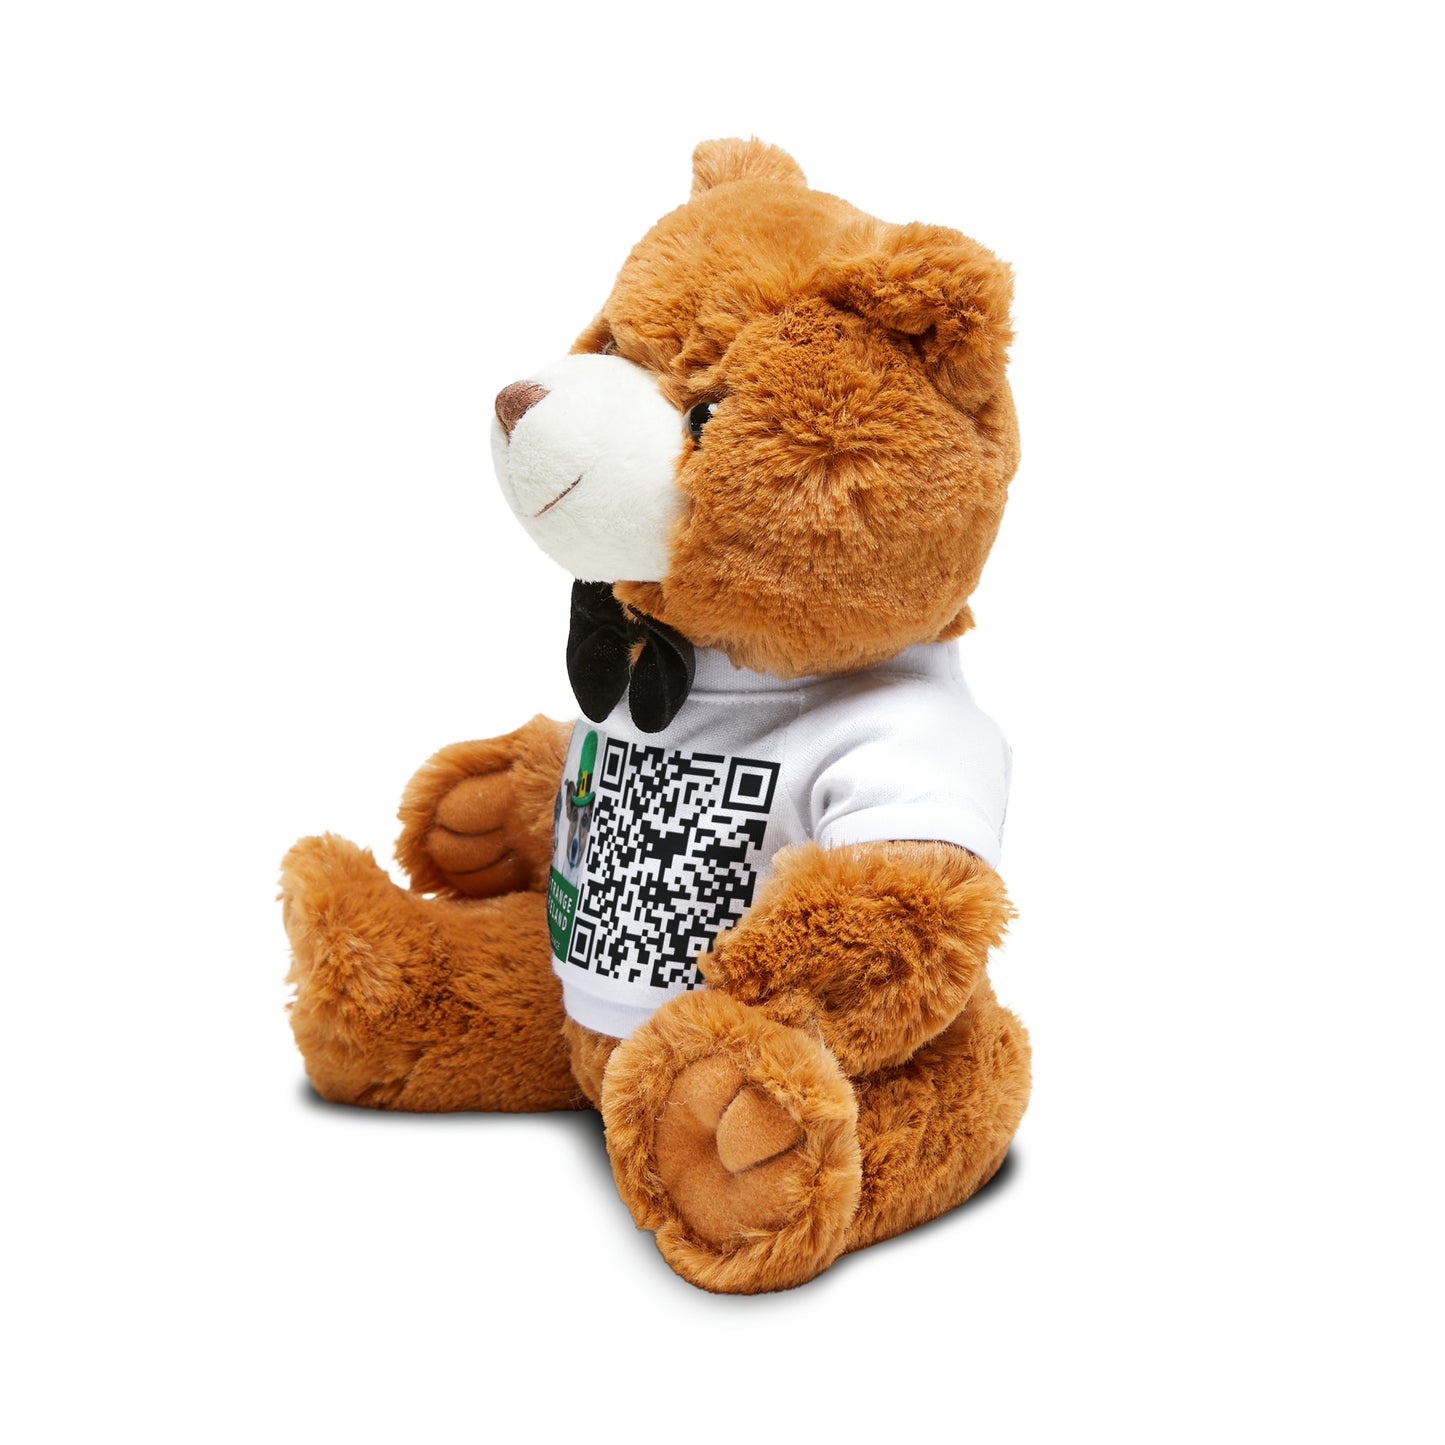 Strange Ireland - Teddy Bear